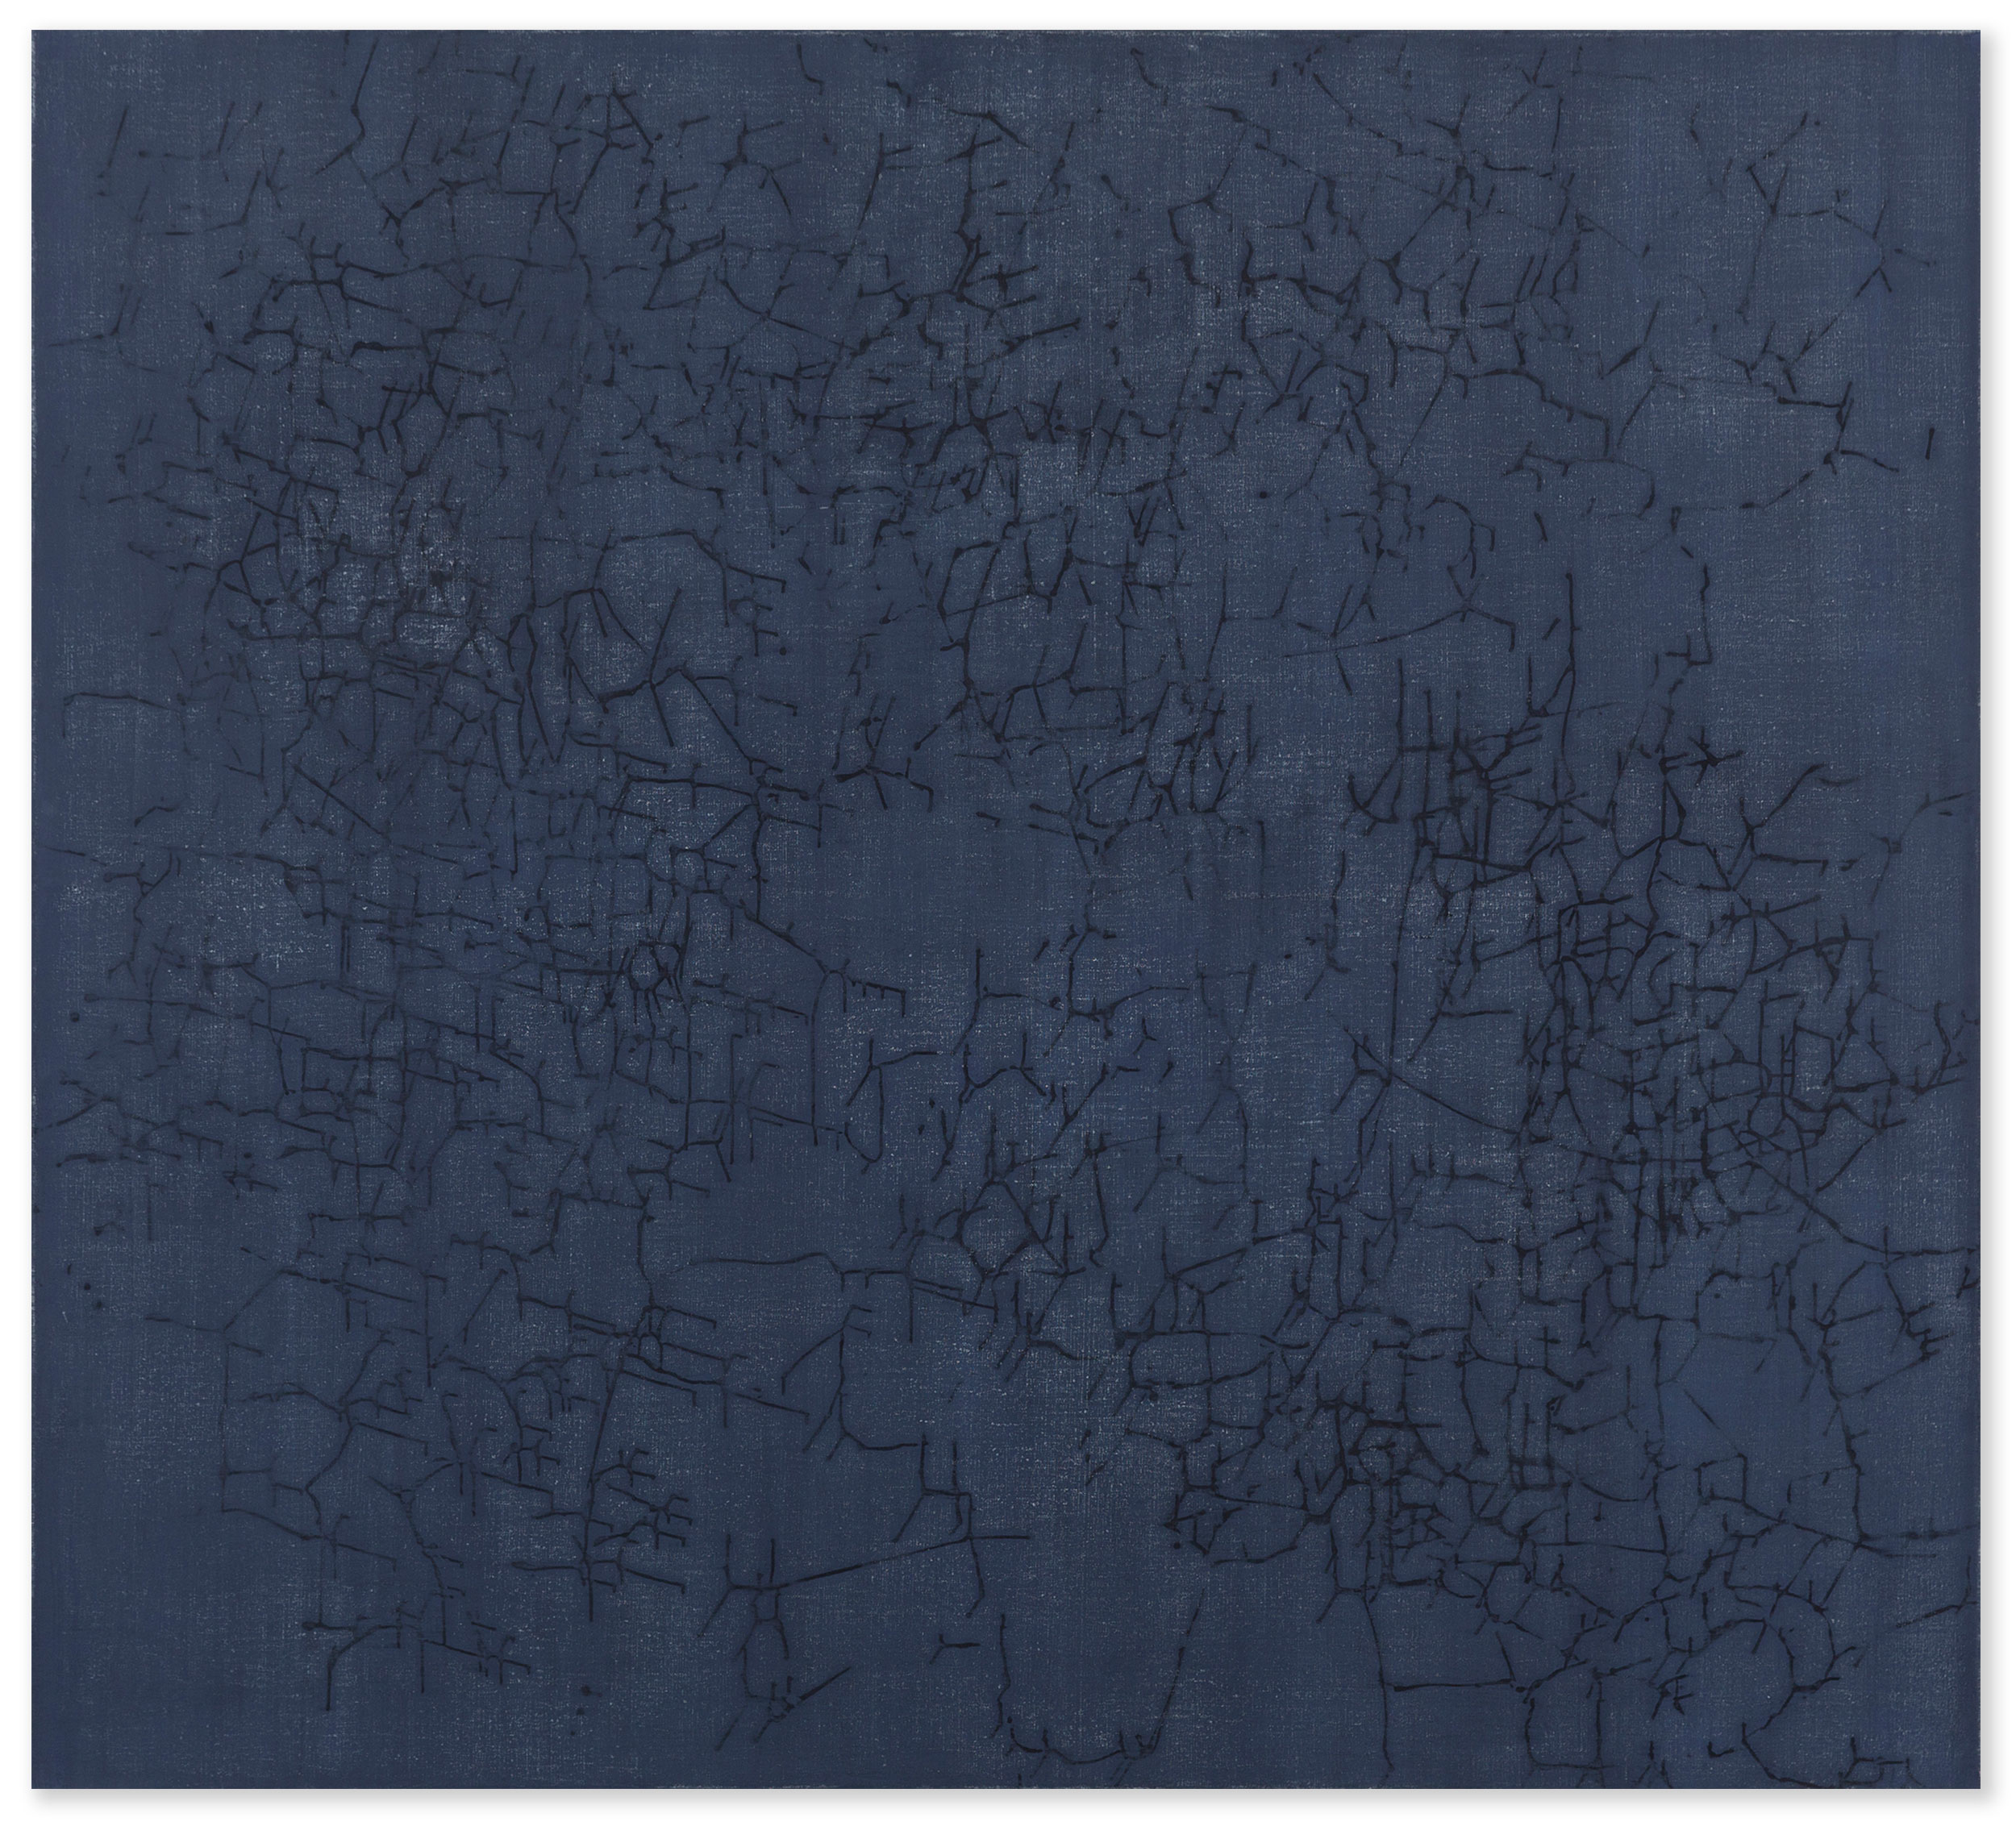 DW K08 / 2015 · egg tempera on canvas · 180 x 200 cm